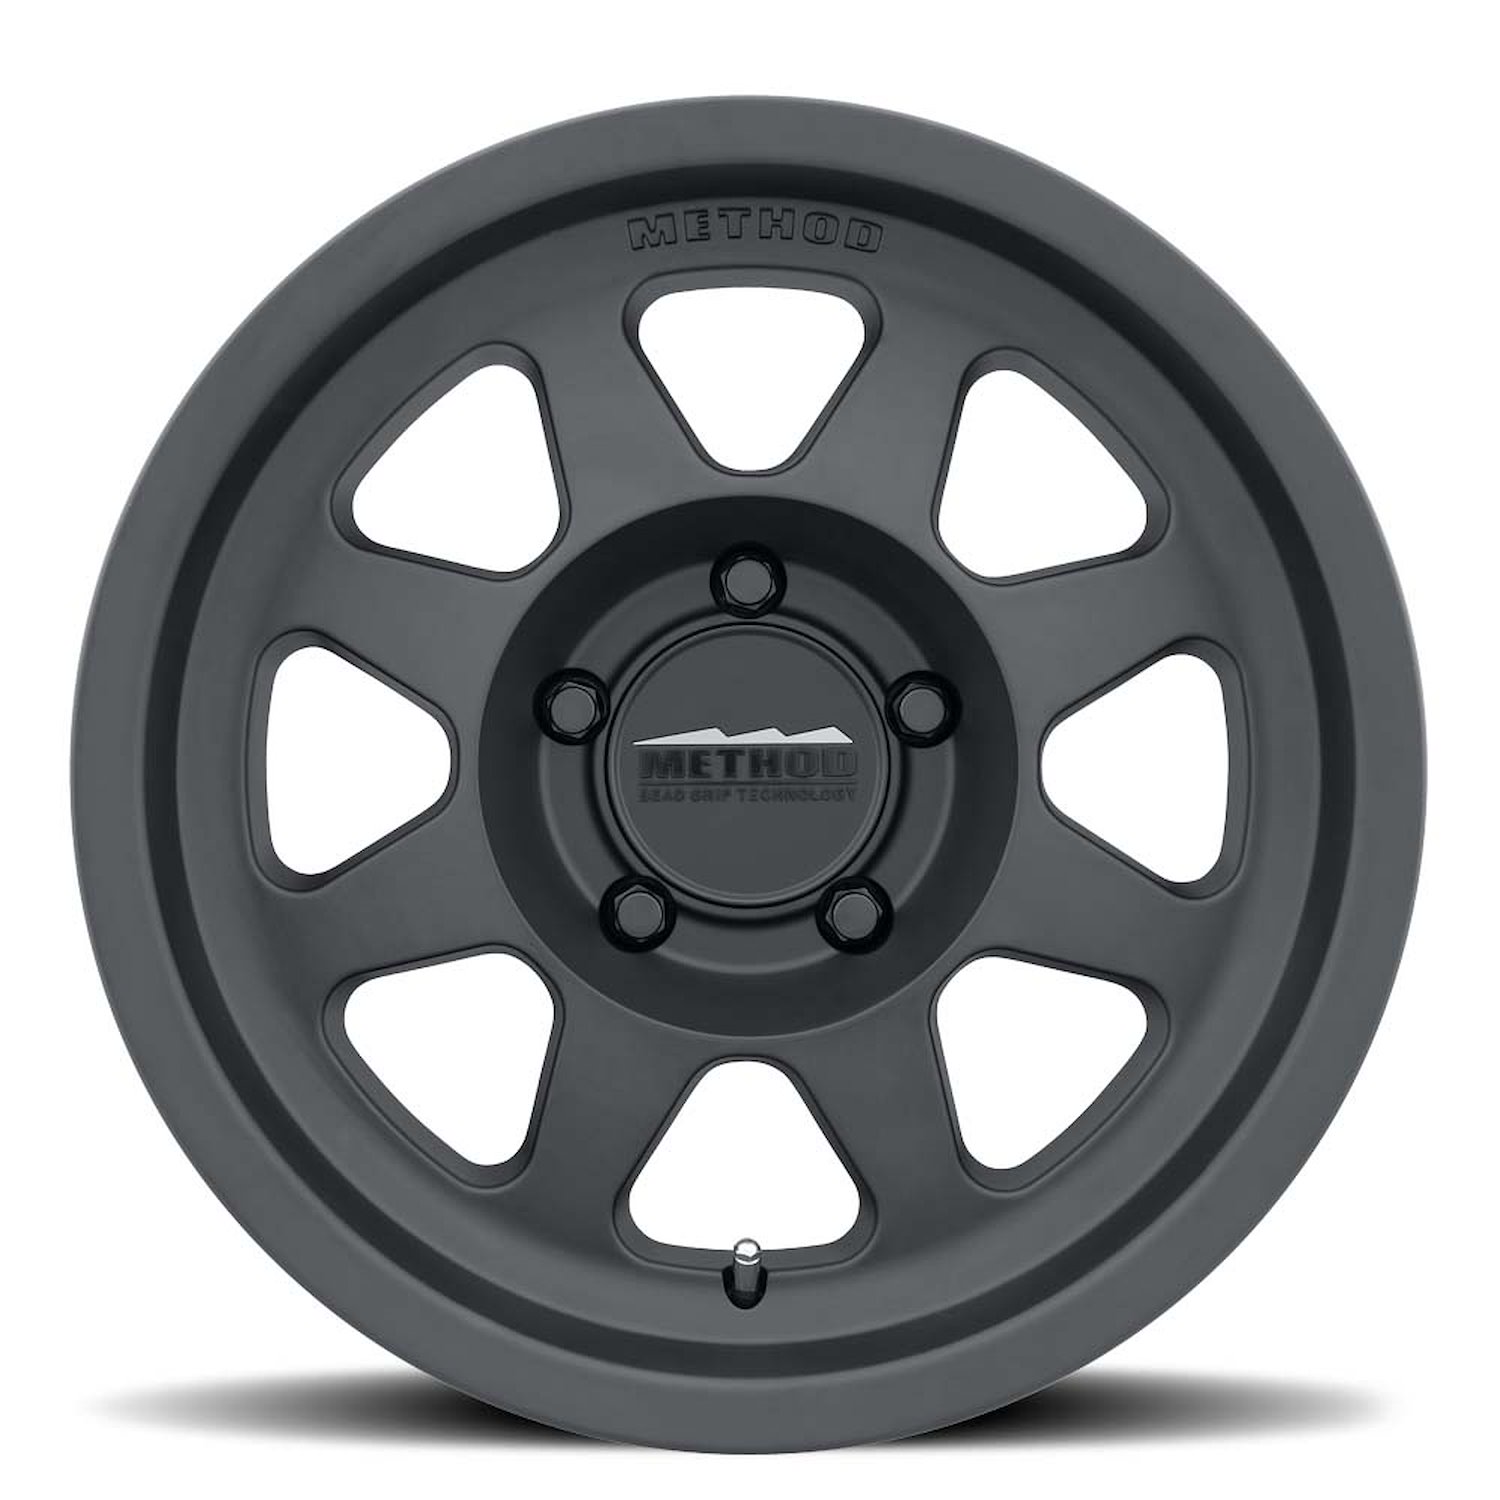 MR70177512530 TRAIL MR701 Bead Grip Wheel [Size: 17" x 7.5"] Matte Black